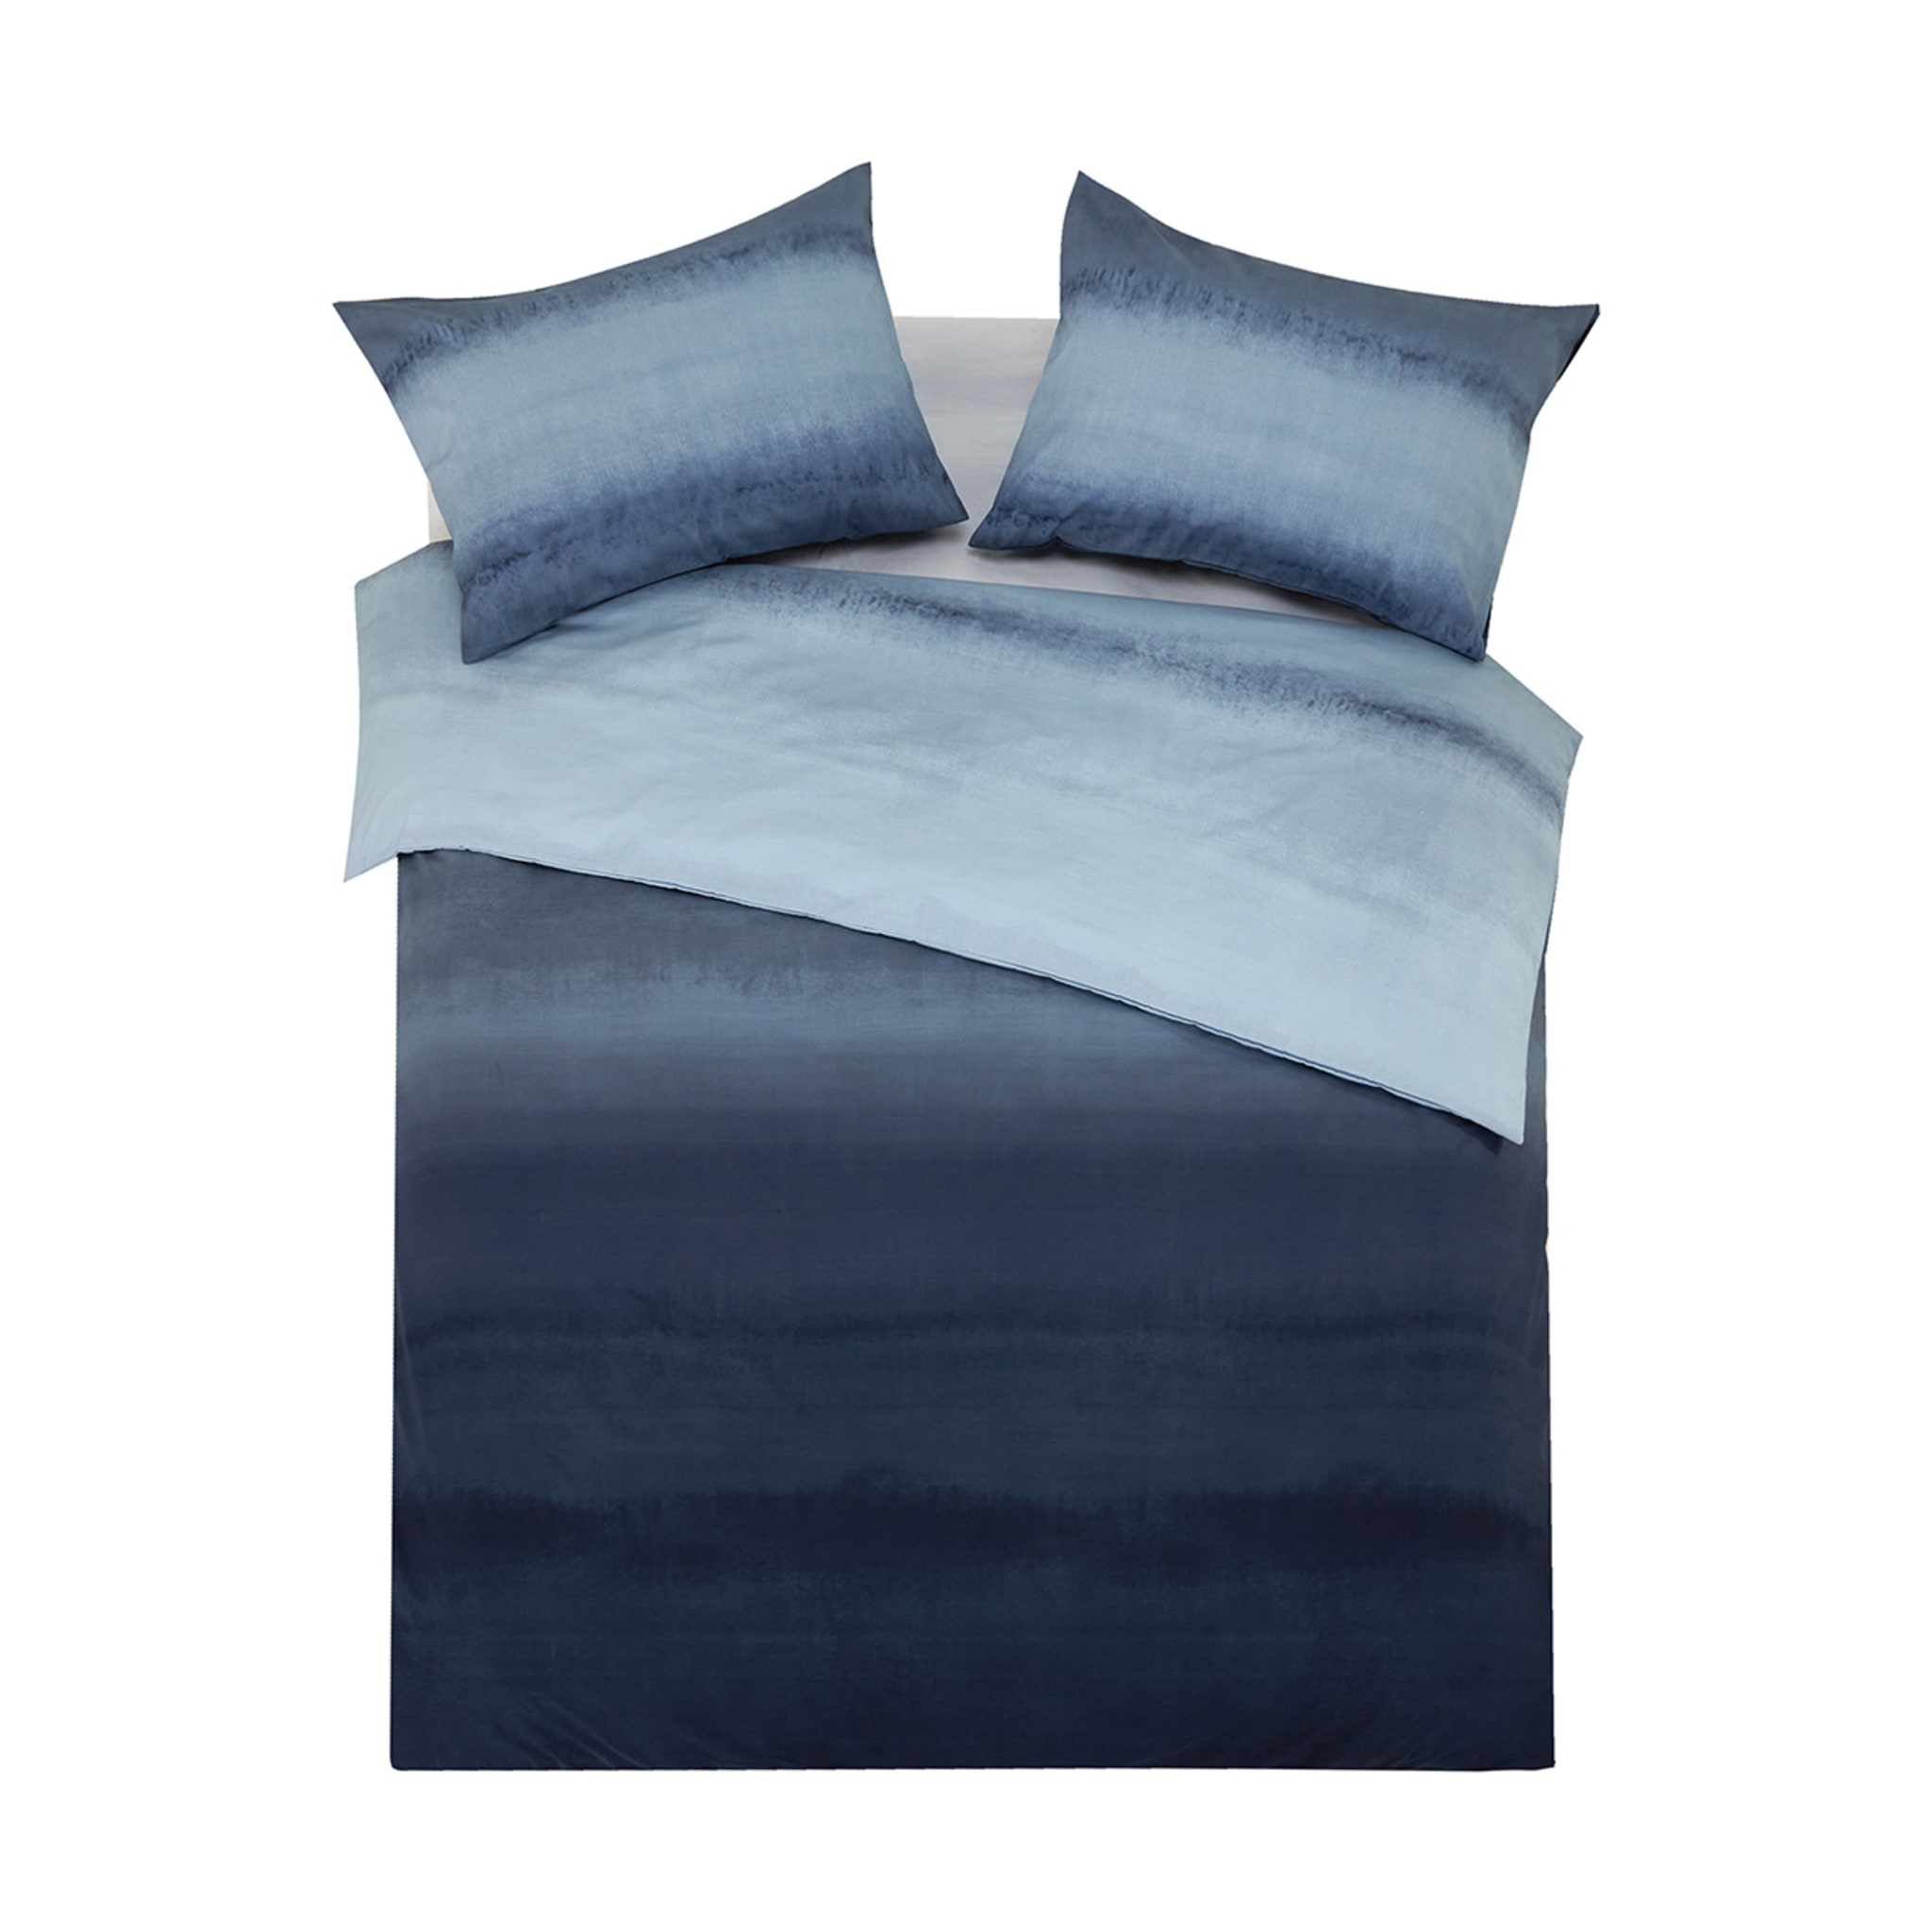 Ombre Reversible Quilt Cover Set - Double Bed - Kmart